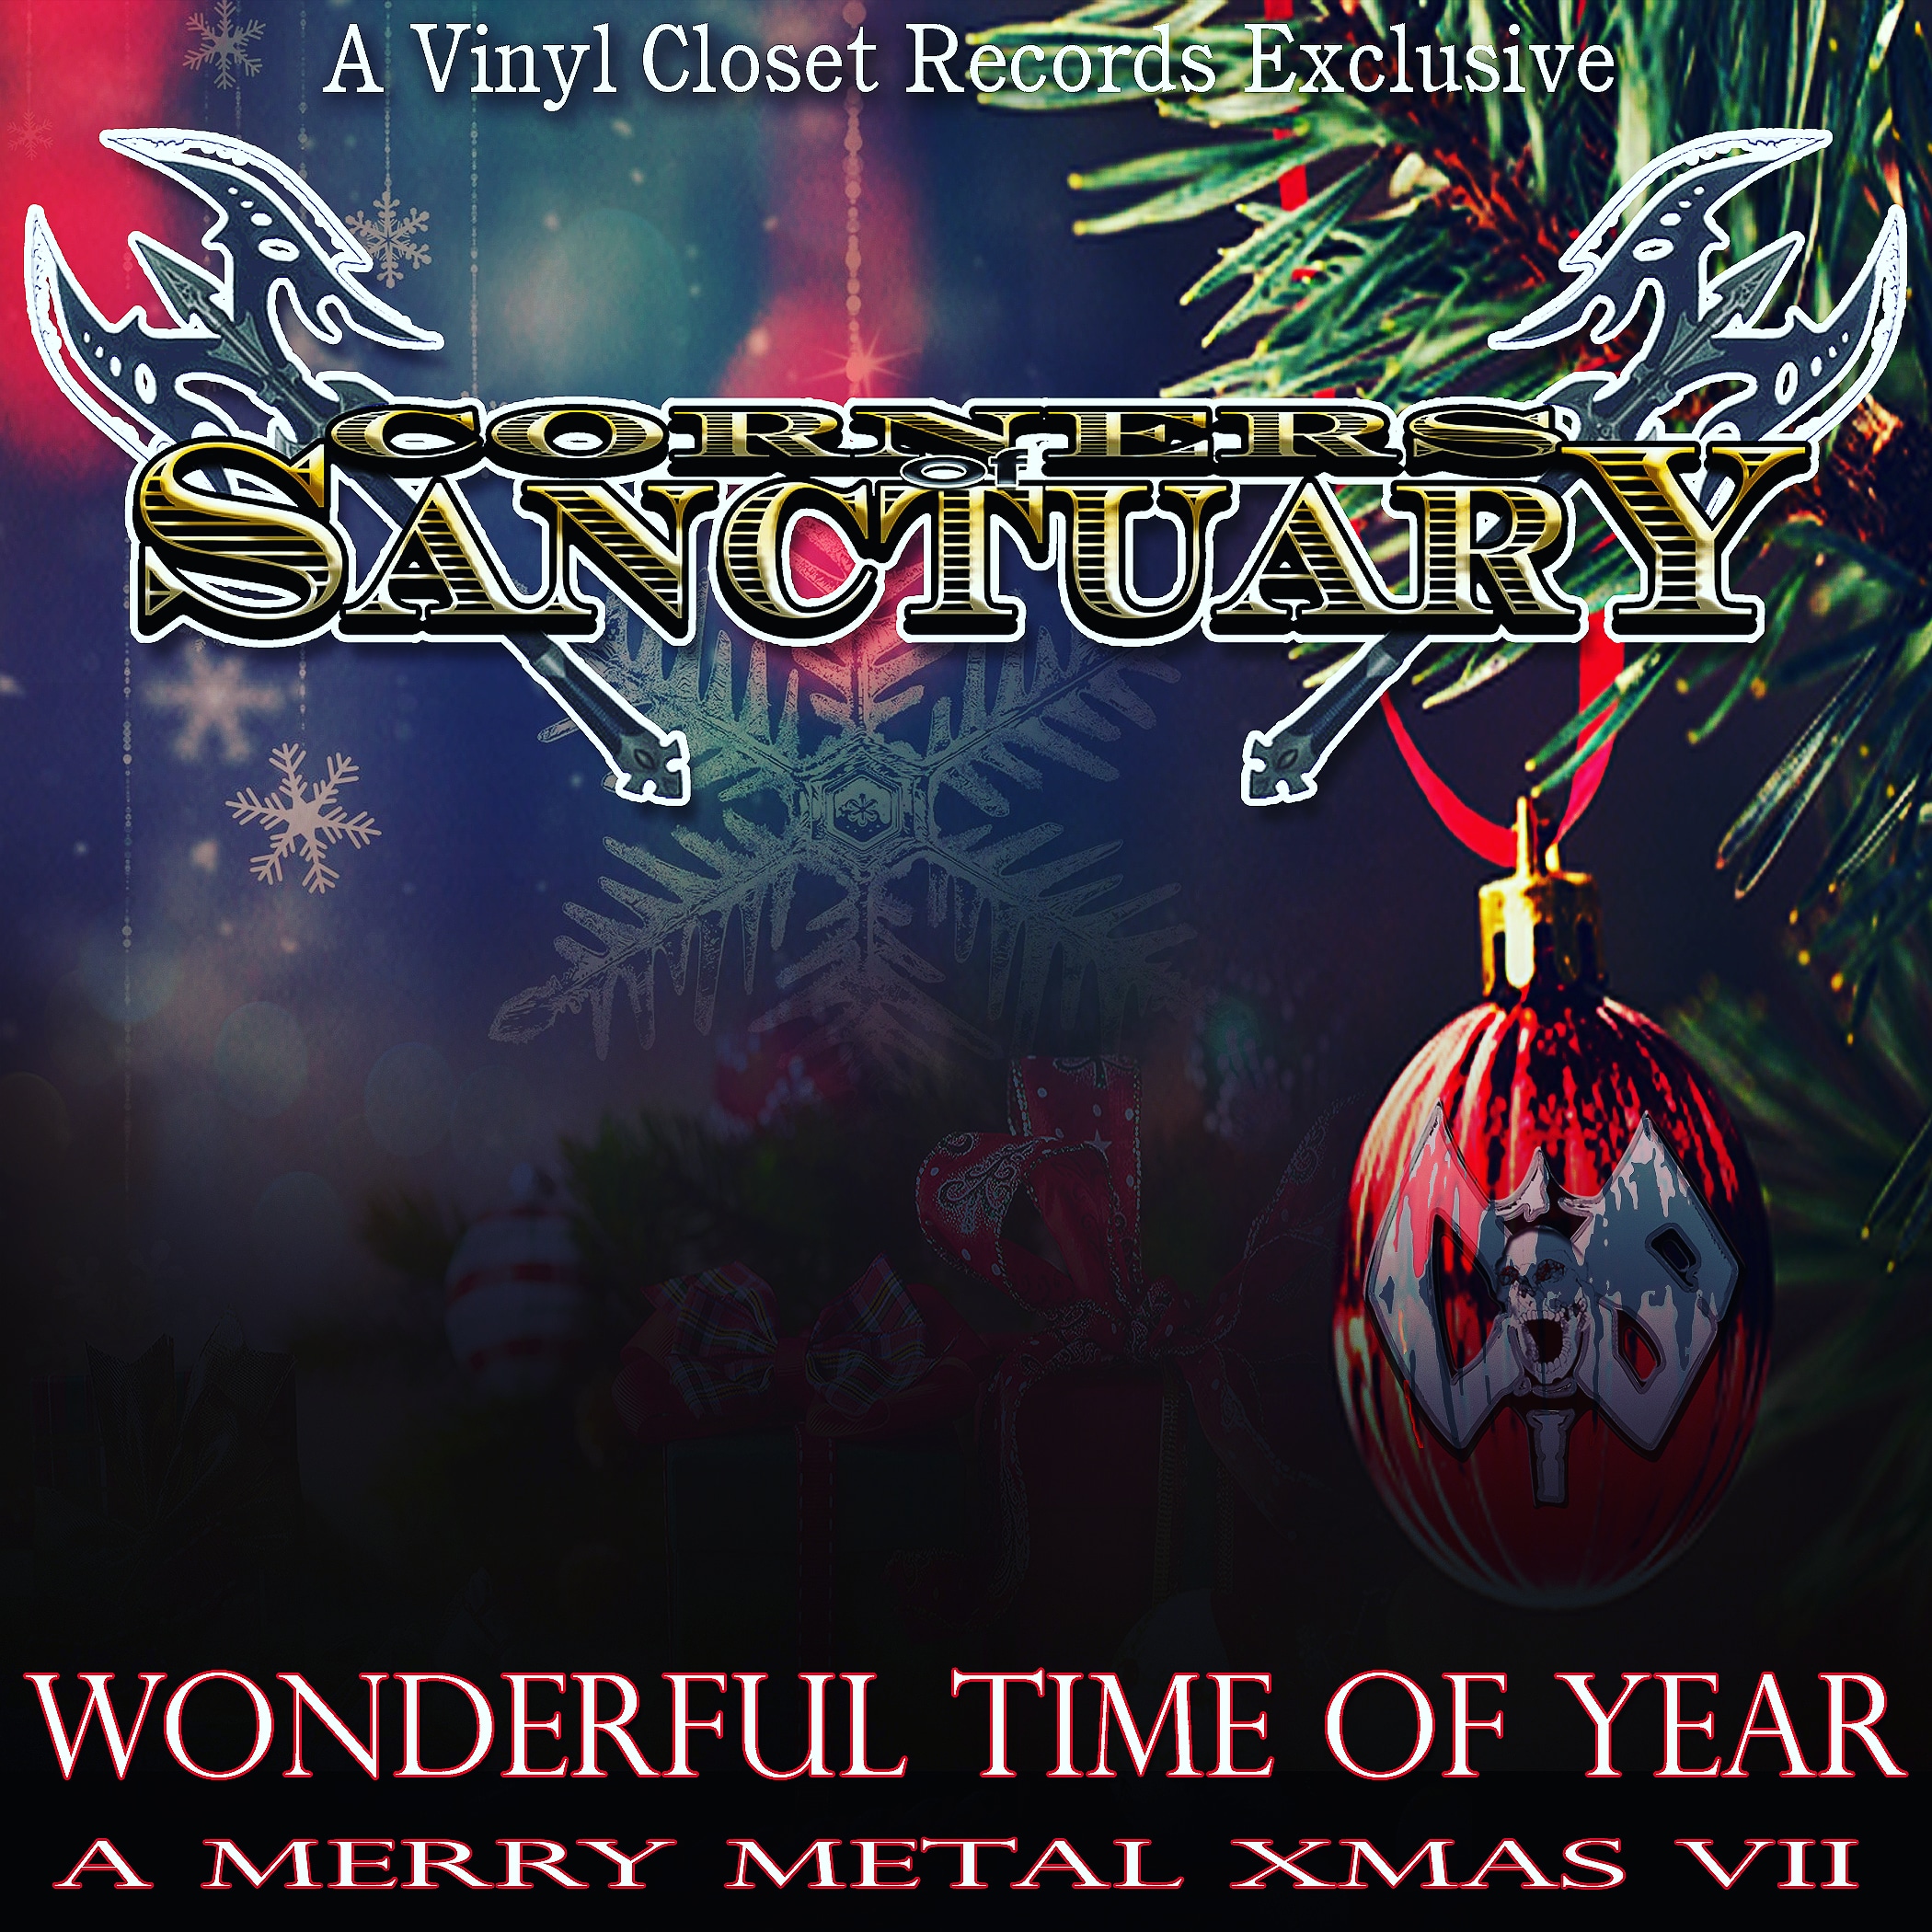 Corners of Sanctuary Wonderful Time of Year 2020 promo